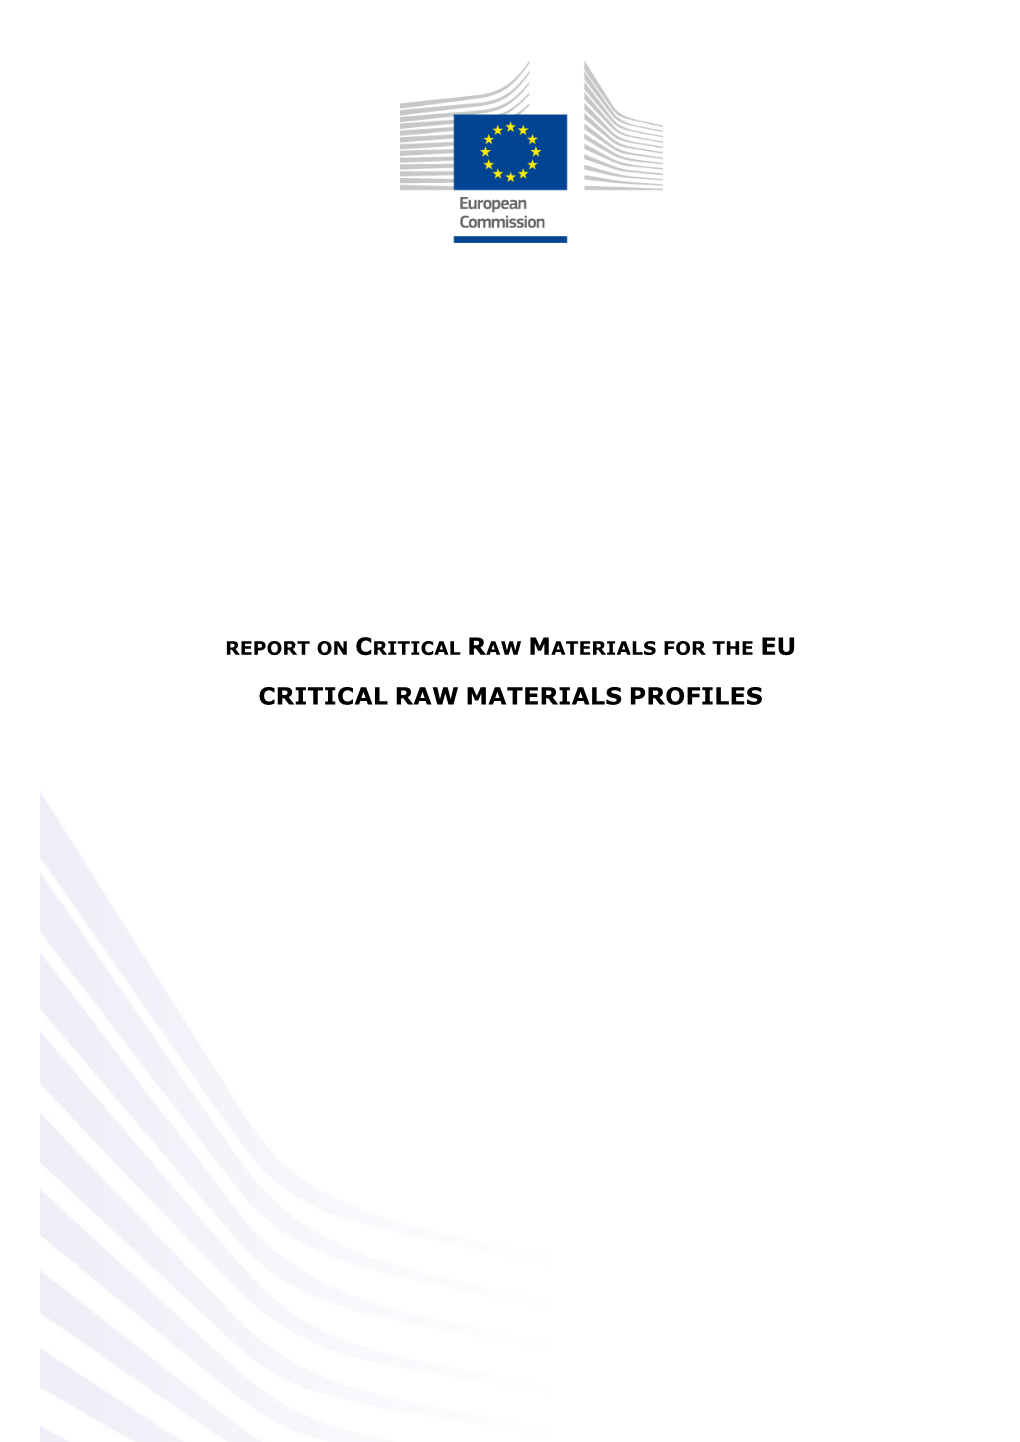 Critical Raw Materials Profiles